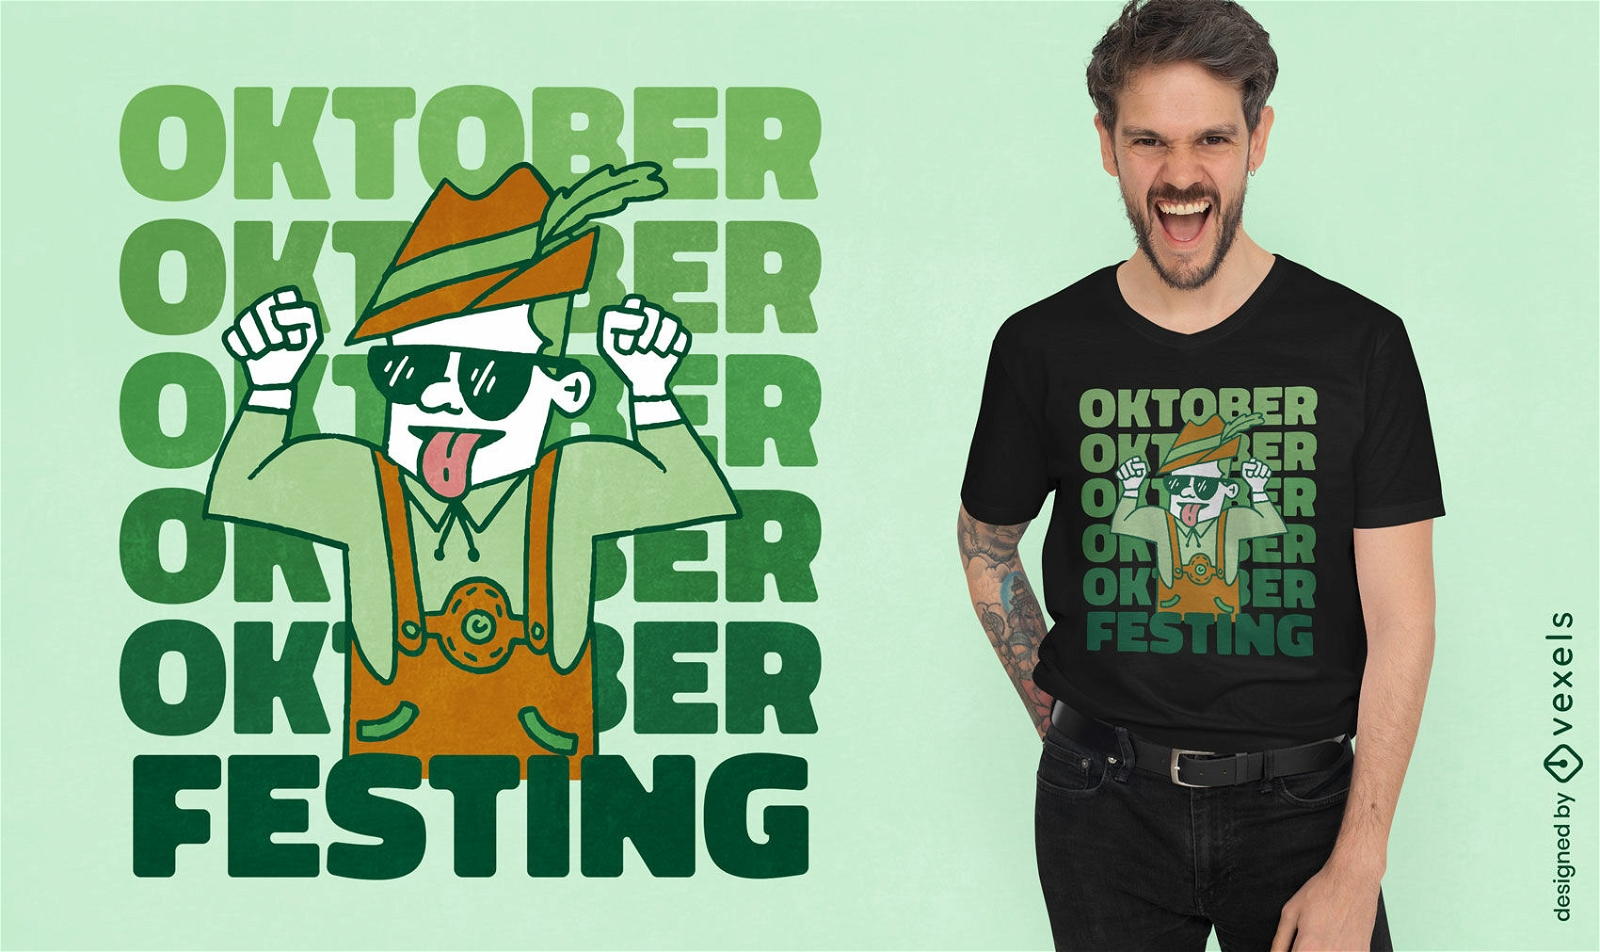 Hombre celebrando el dise?o de camiseta de oktoberfest